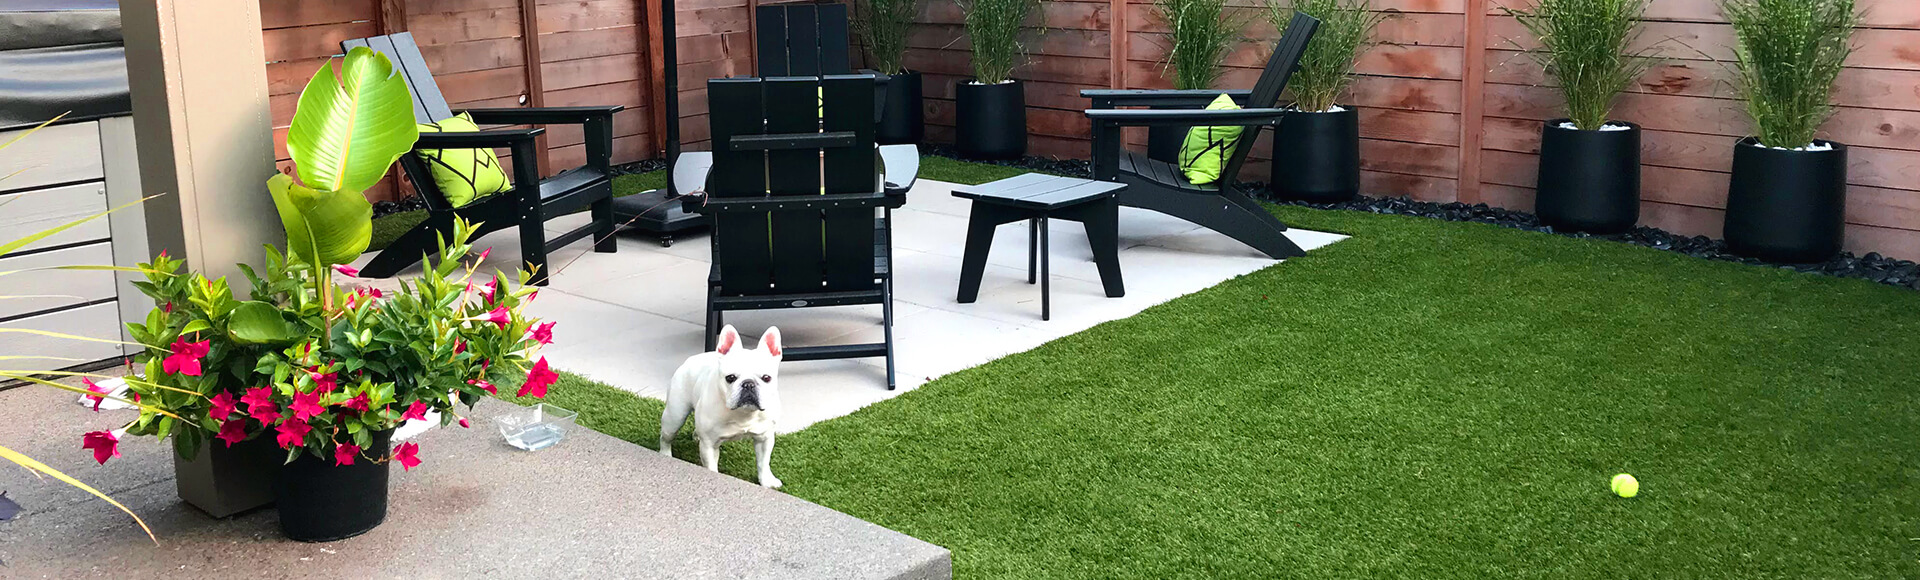 Tiny white french bulldog enjoying turf lawn